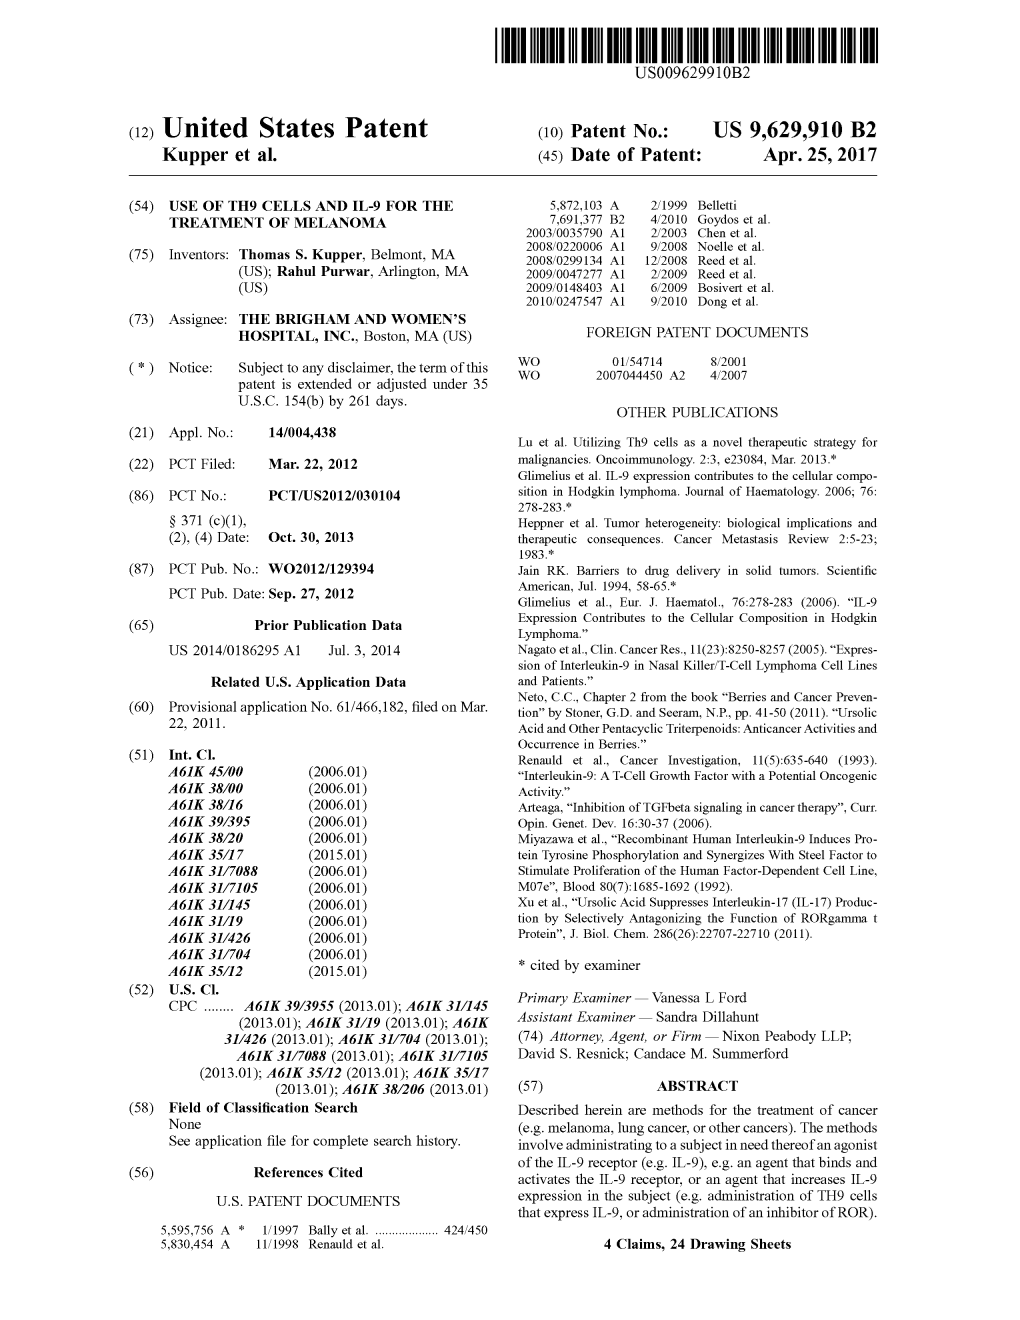 United States Patent (10) Patent No.: US 9,629,910 B2 Kupper Et Al